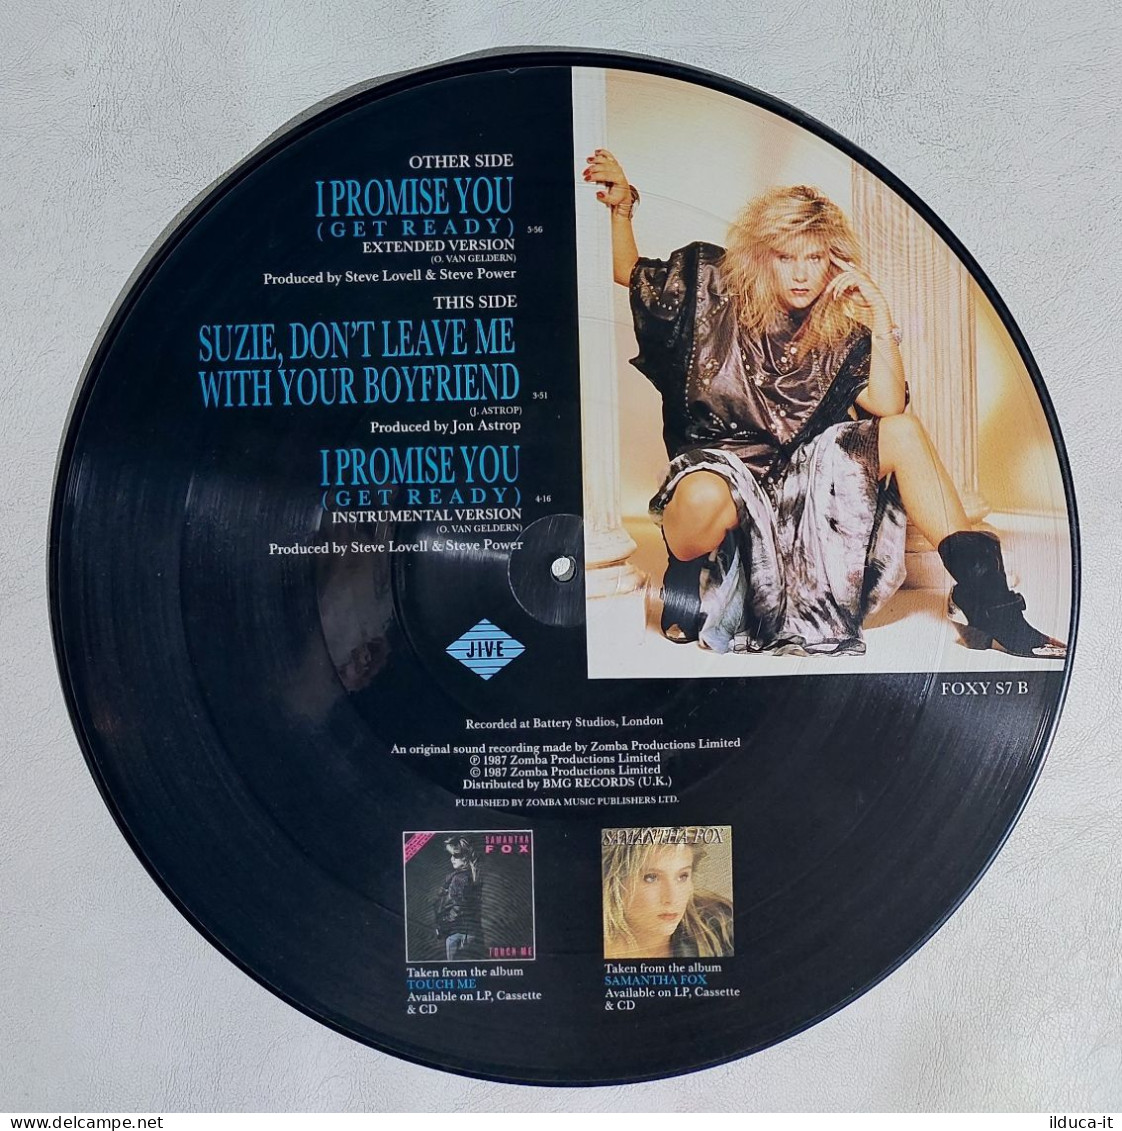 I114382 LP 33 Giri Picture Disc - Samantha Fox - I Promise You (Get Ready) - Ediciones Limitadas